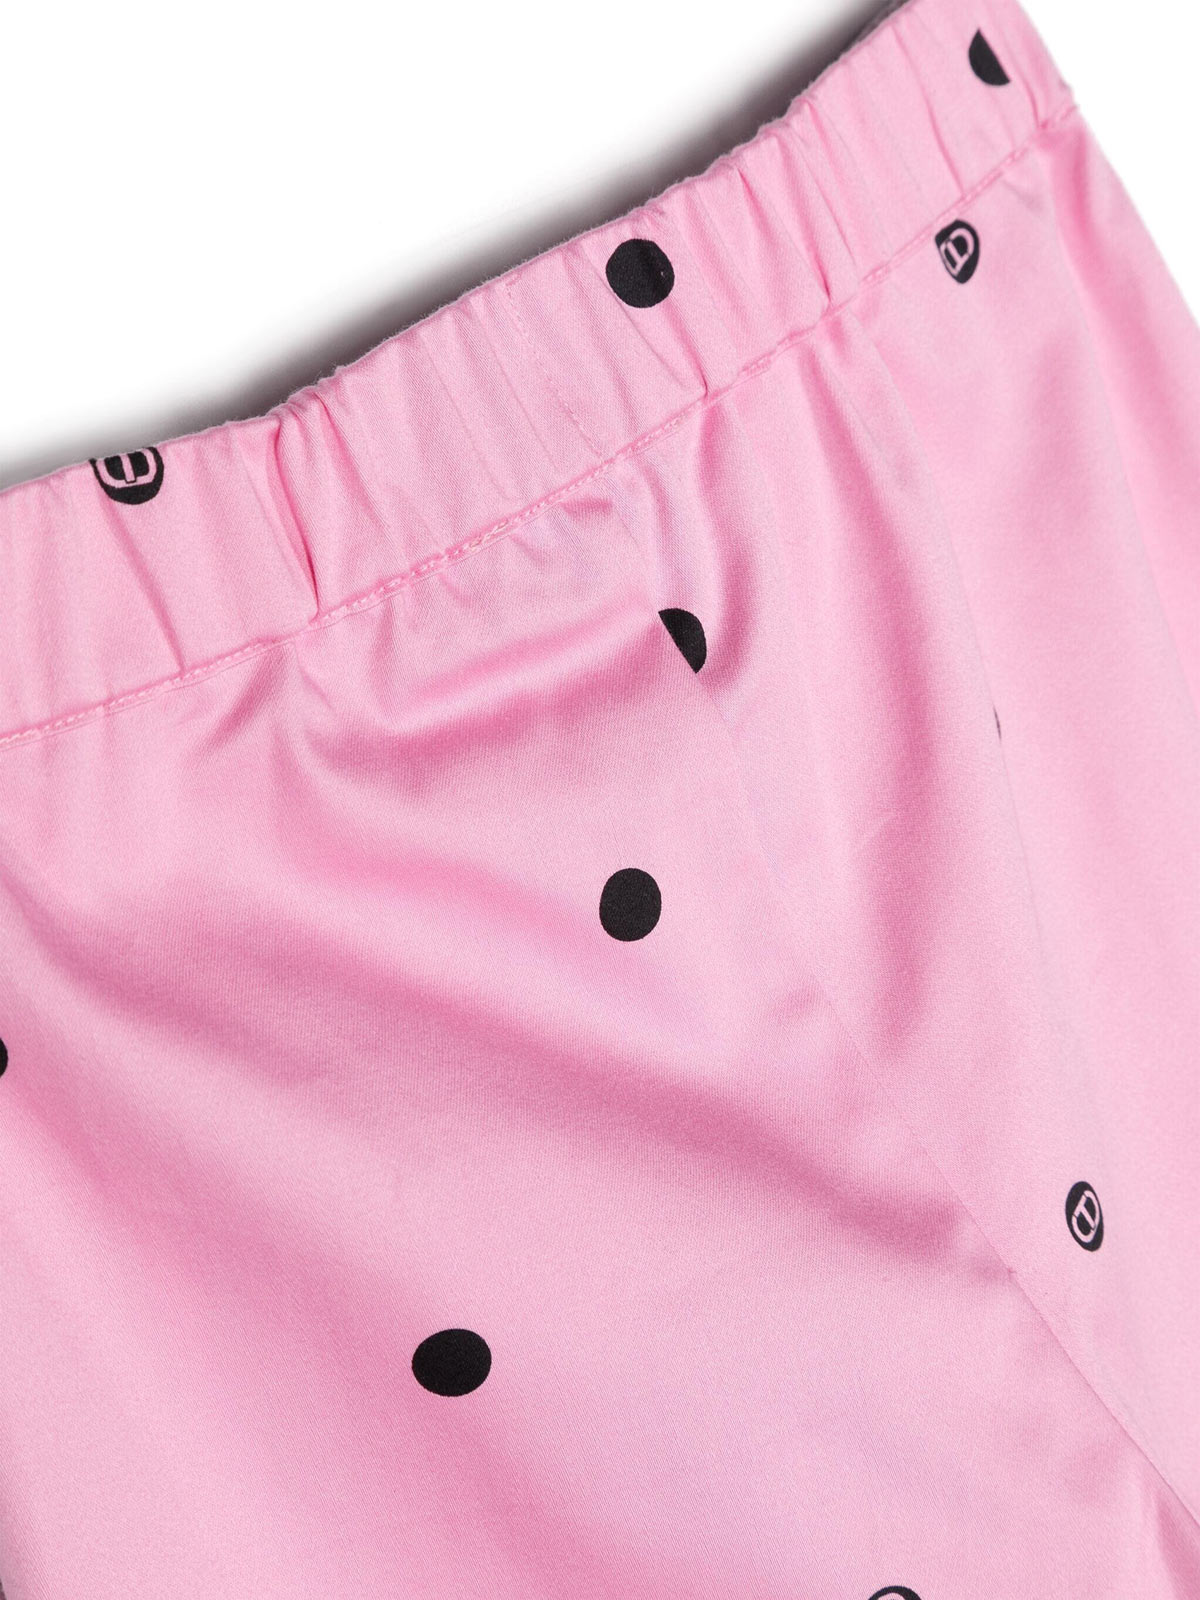 Twinset Girl's polka dot trousers & top set